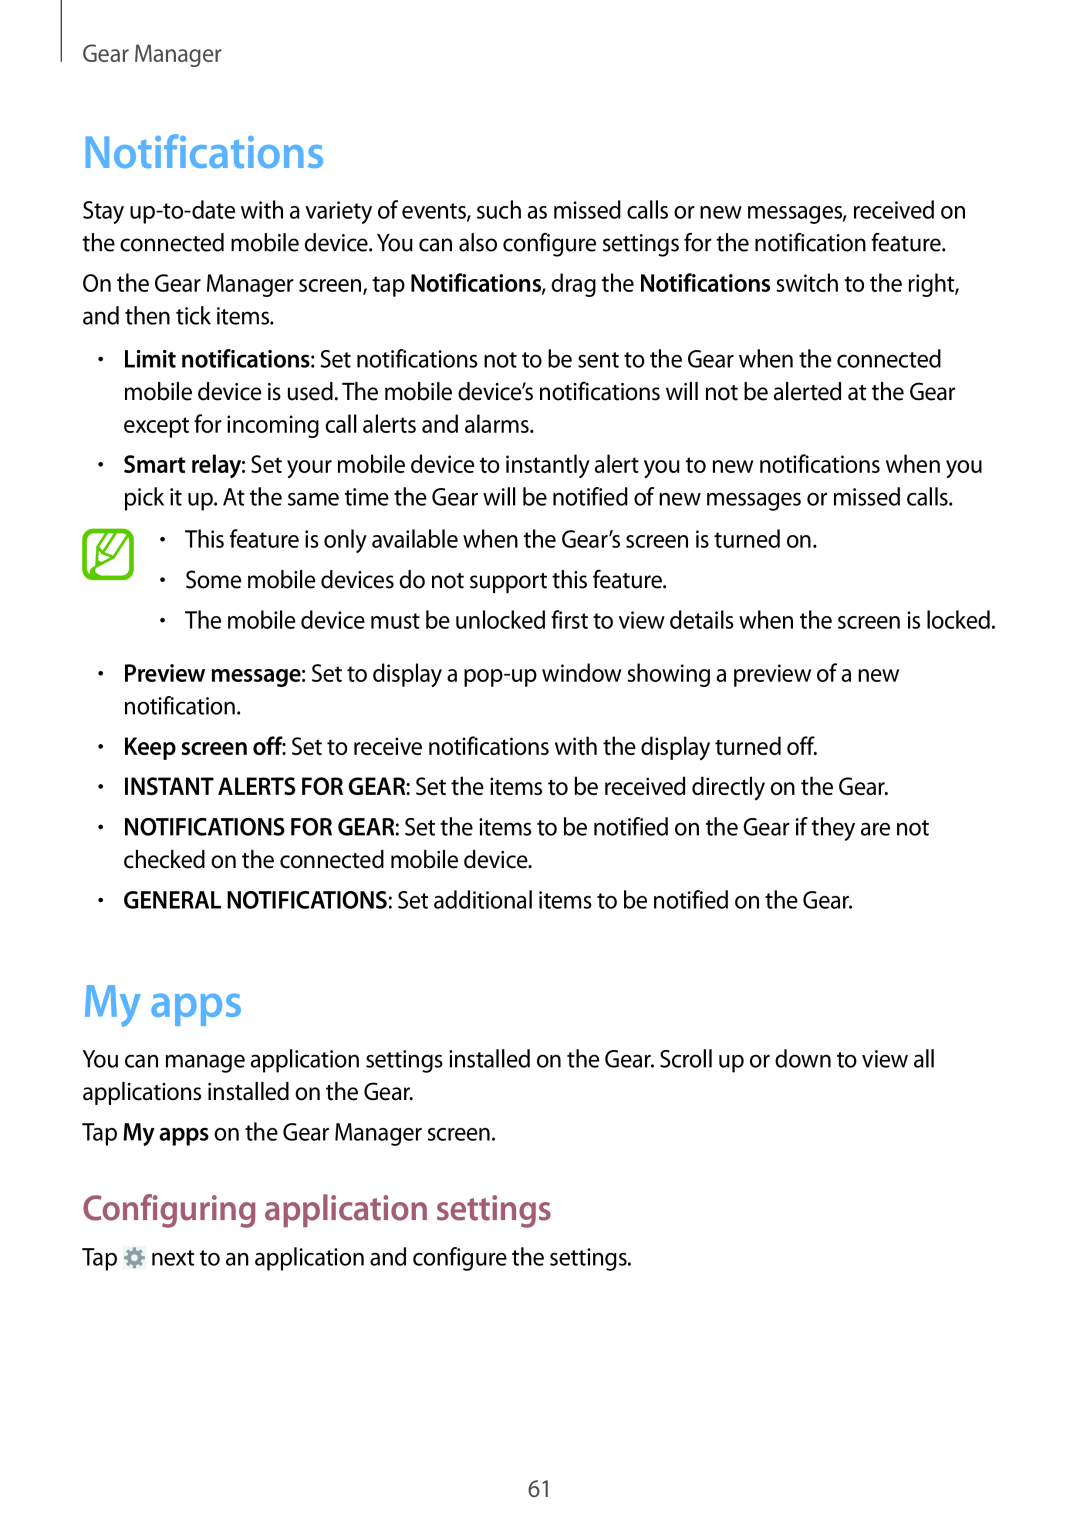 Samsung SM-V7000ZWABGL, SM-V7000ZOATUR manual My apps, Configuring application settings, Notifications, Gear Manager 